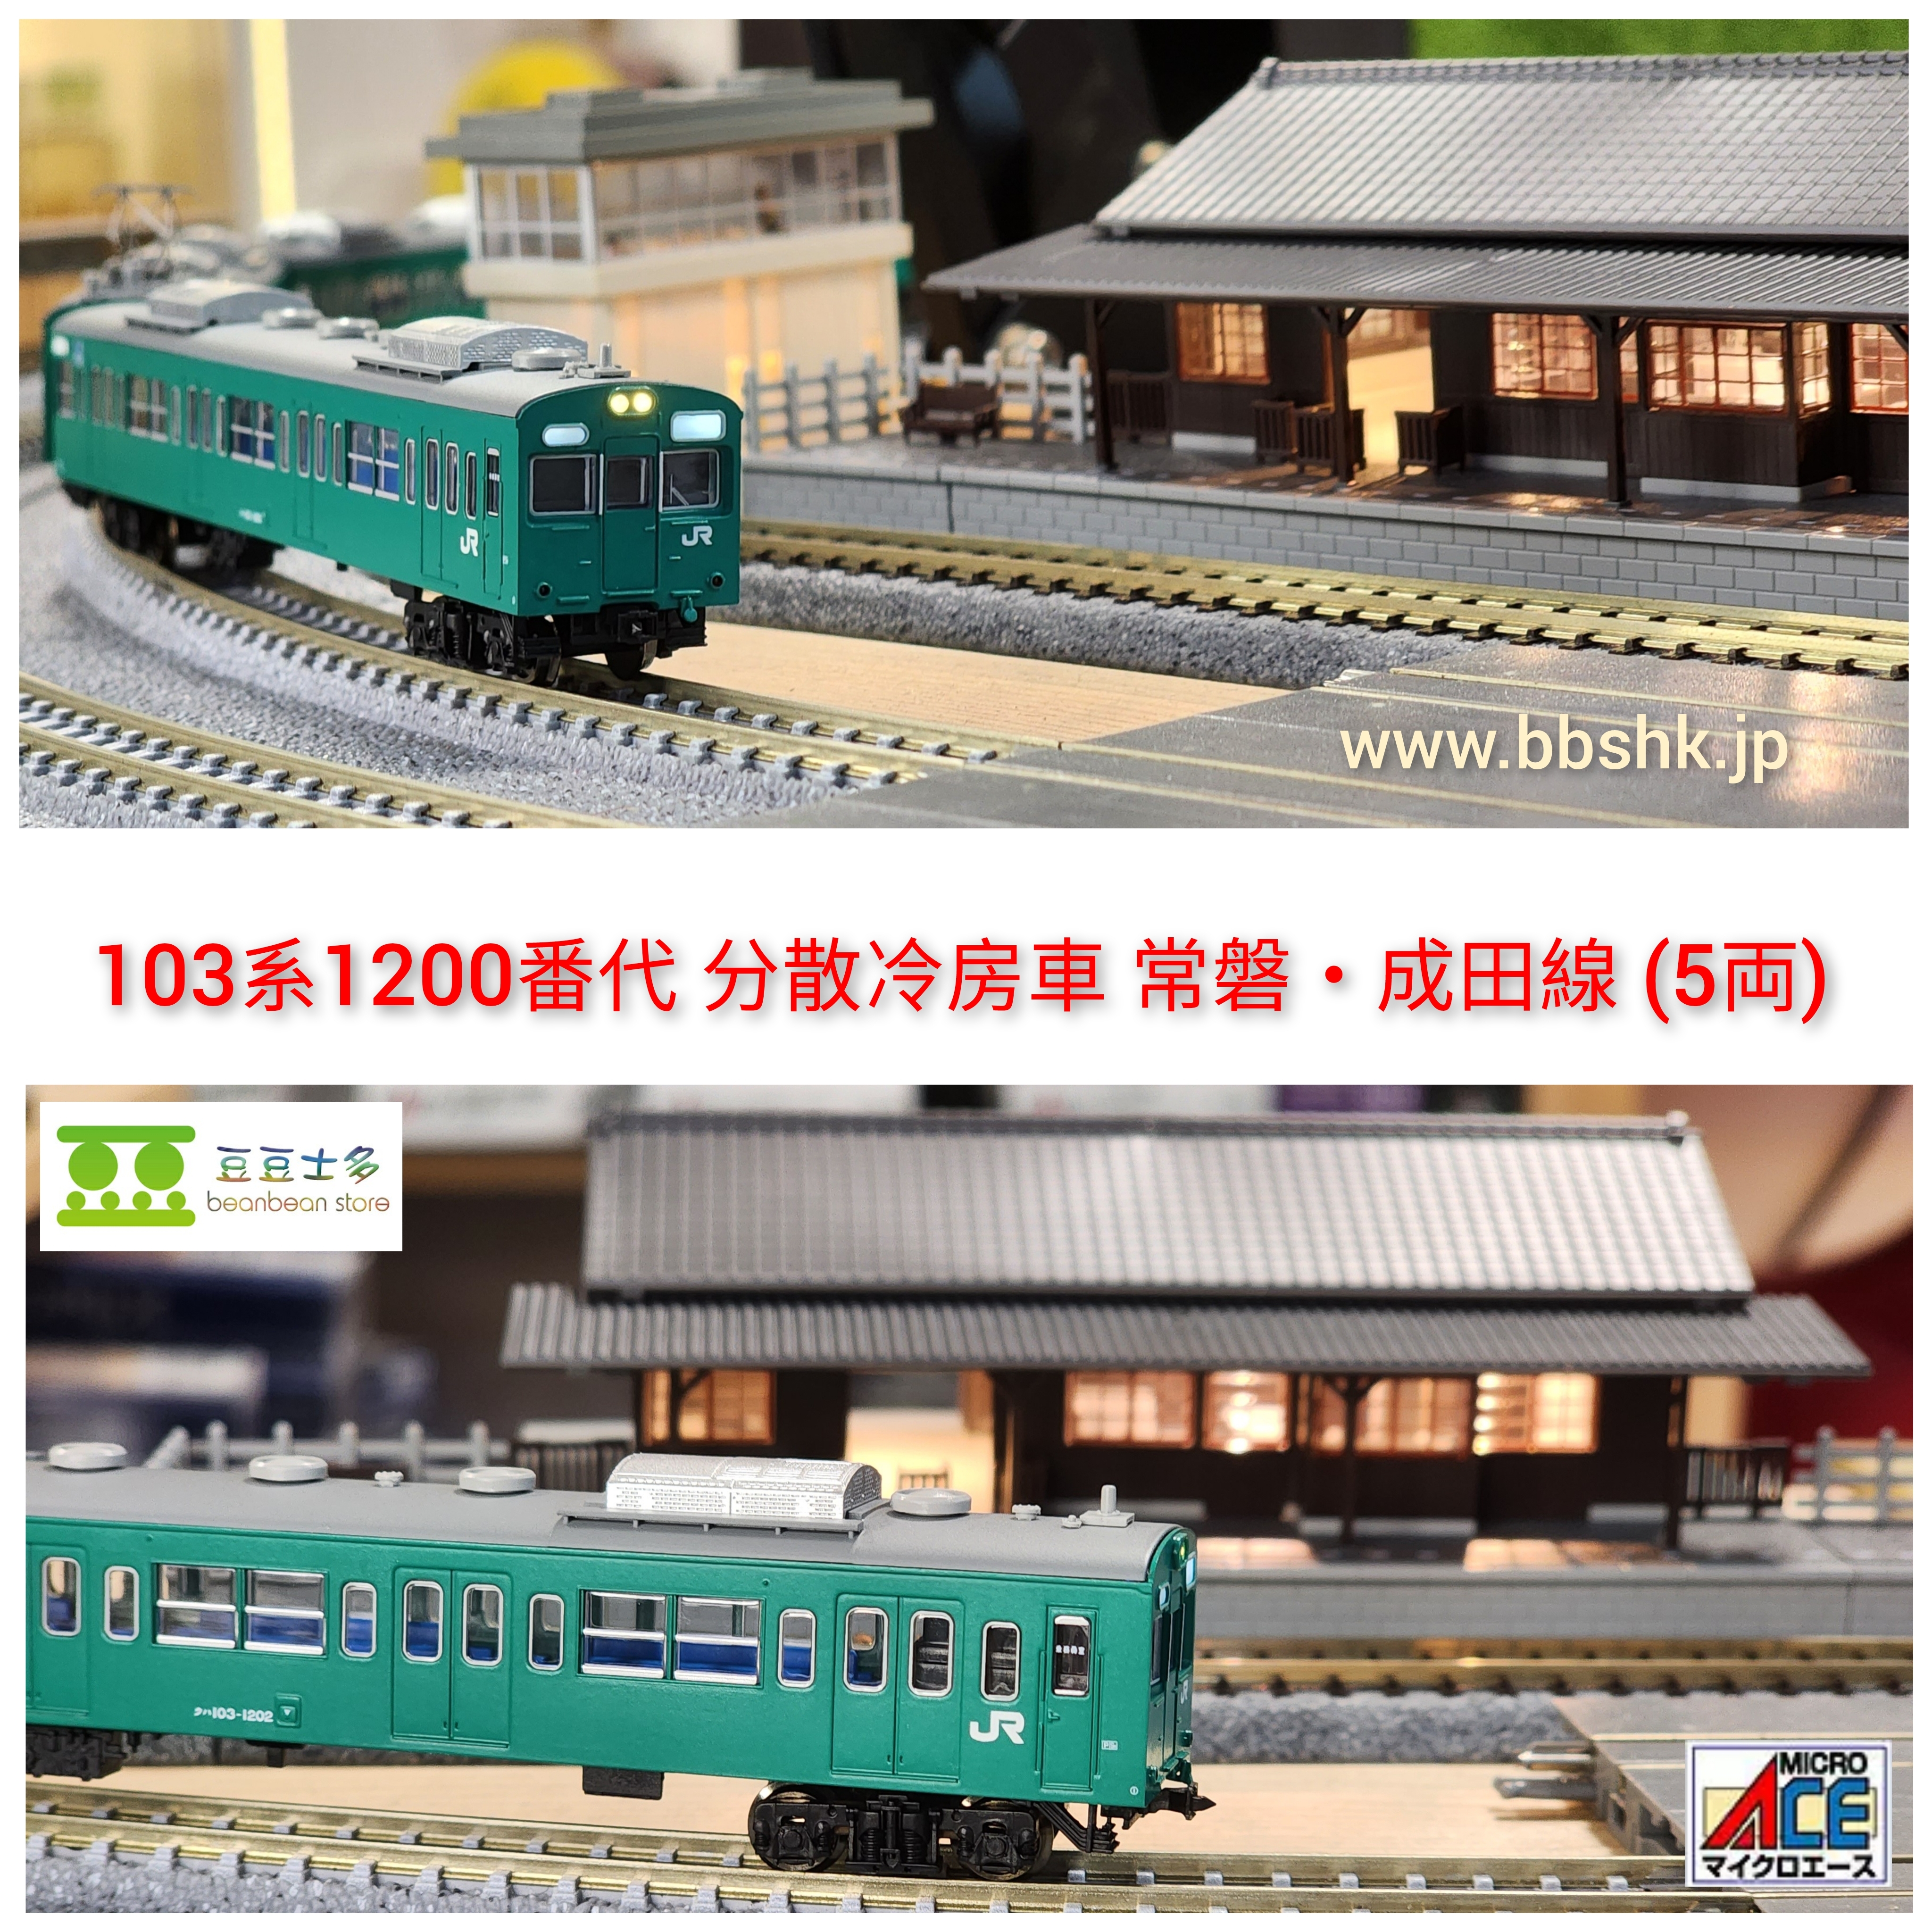 MICRO ACE A0796 103系1200番代 分散冷房車 常磐・成田線 (5両)